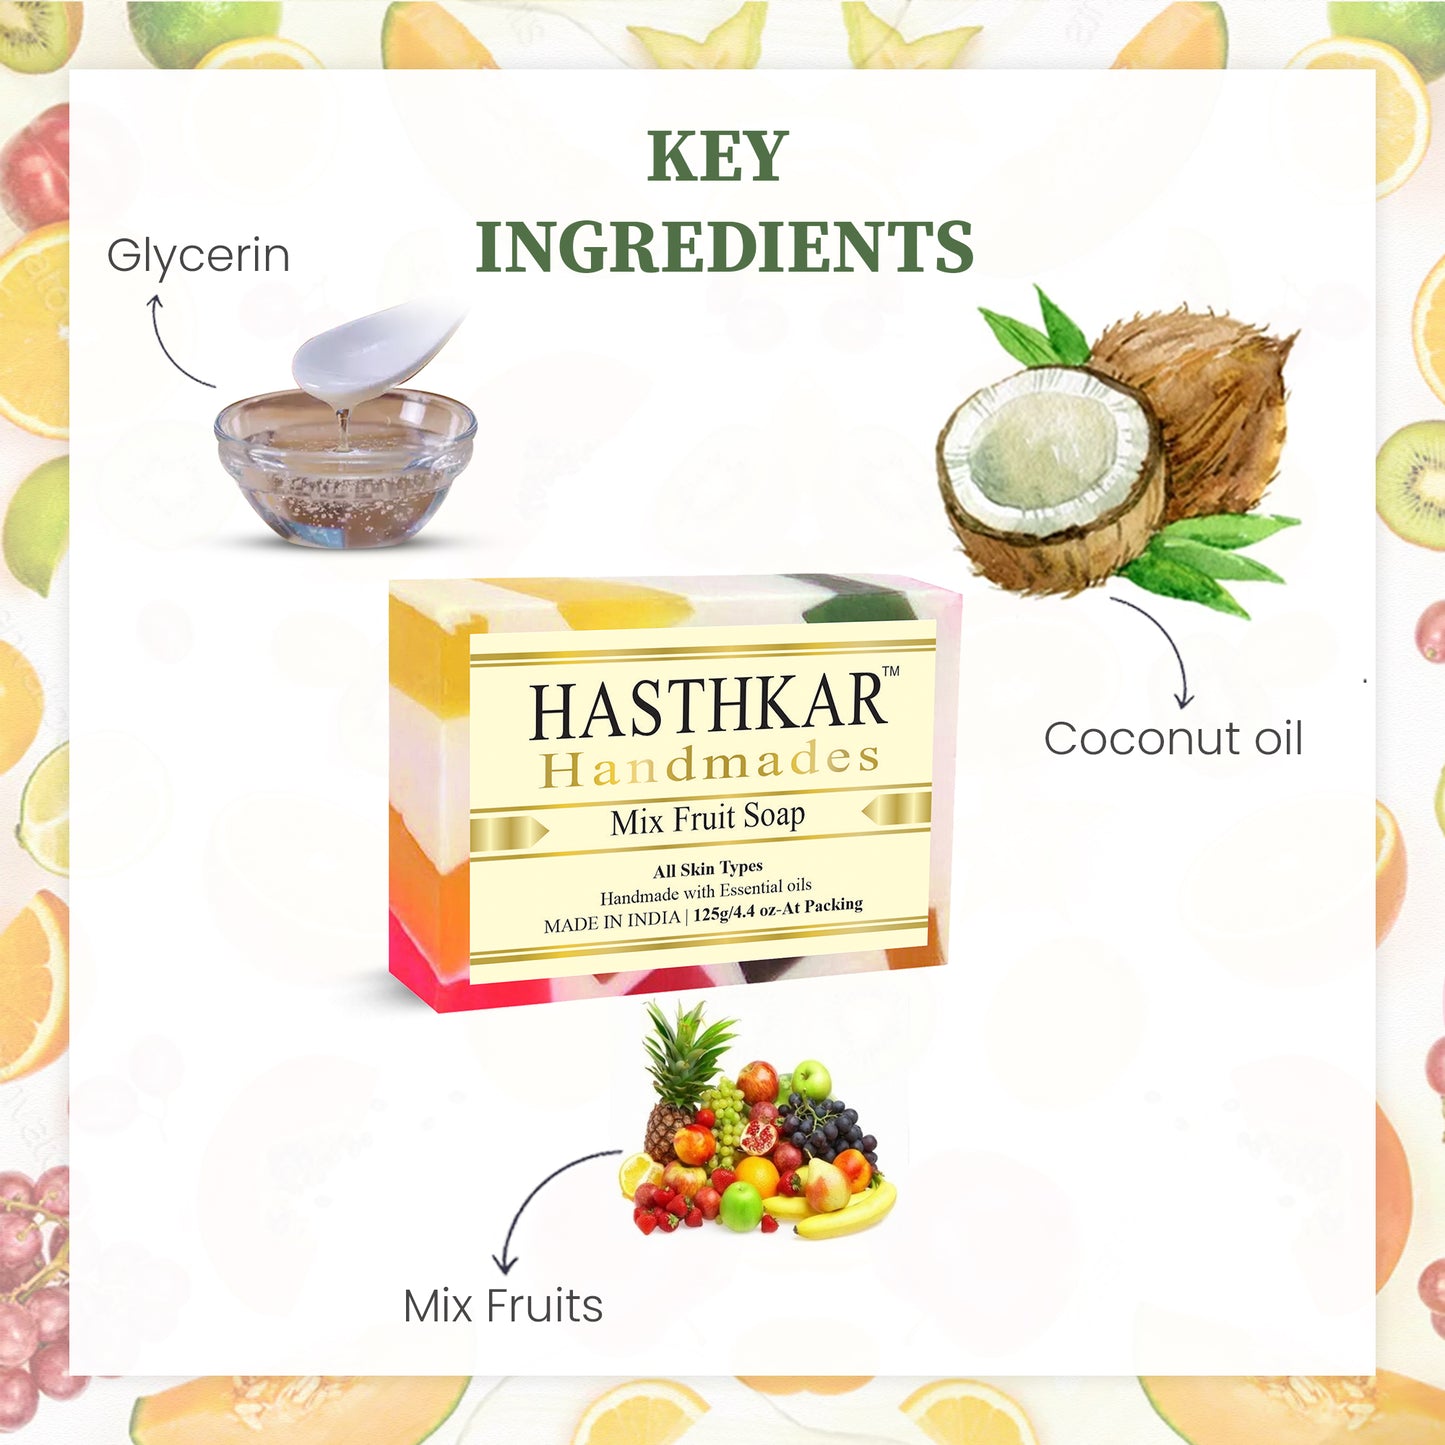 Hasthkar Handmades Glycerine Mix fruit Soap 125gm Pack of 6